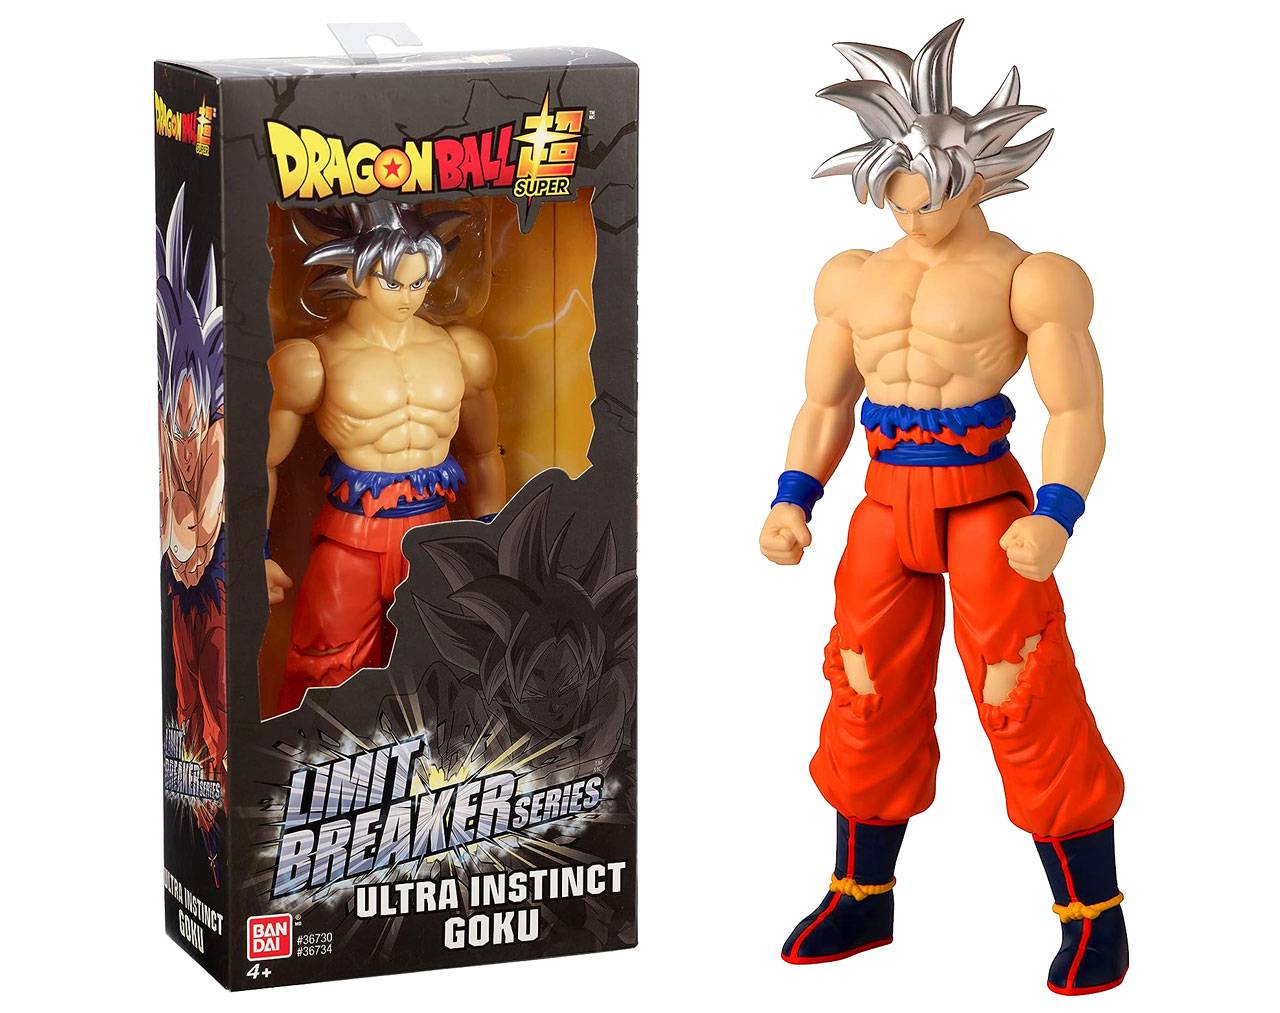 Goku (Ultra Instinct) - Dragon Ball Super Limit Breaker Series Bandai